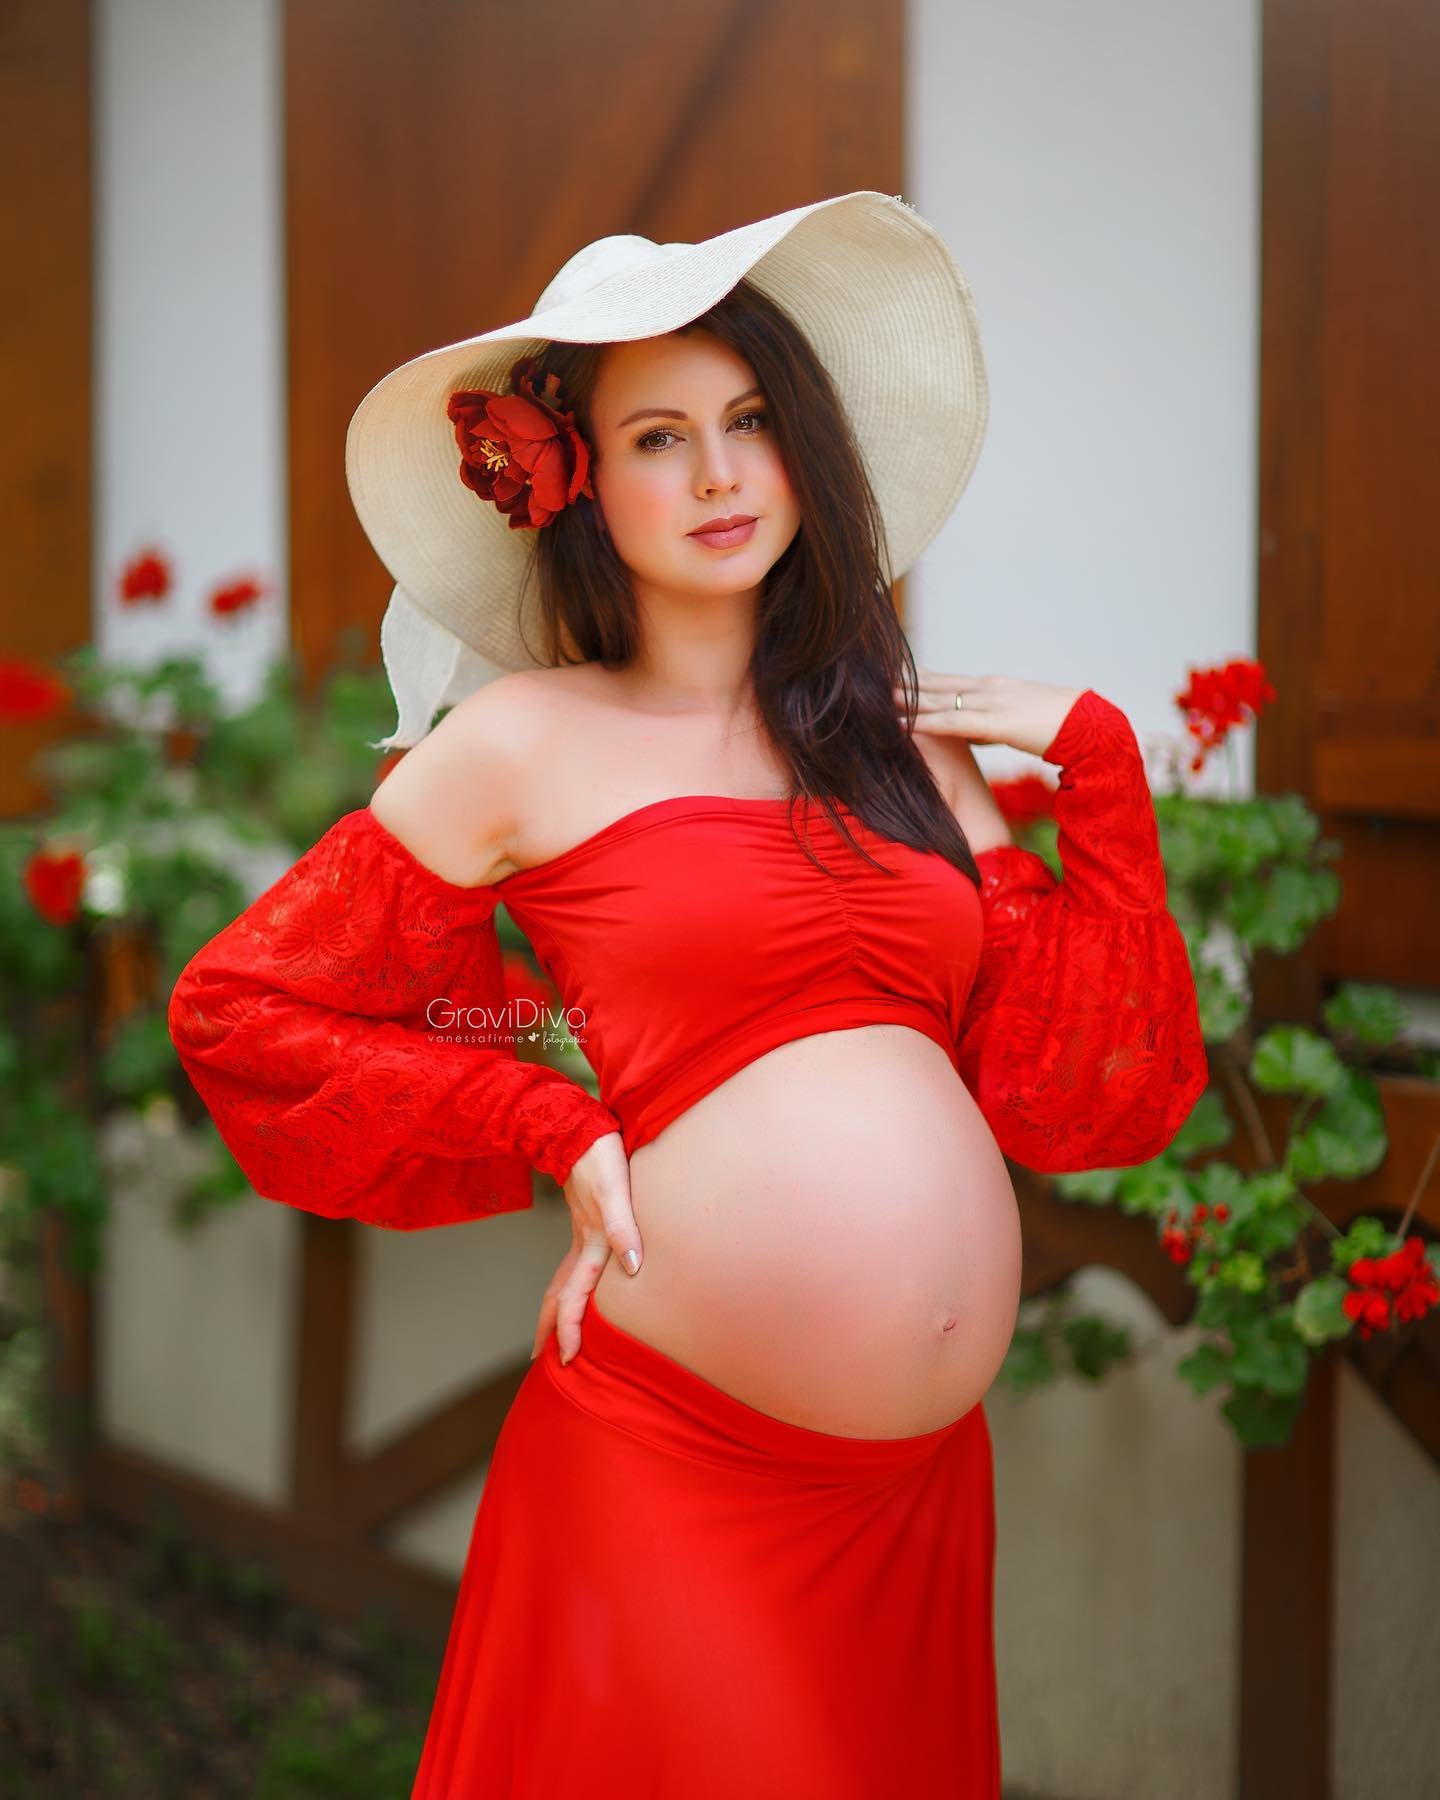 Gravidiva Vanessa Firma Fotografia gestante de look vermelho e chapeu